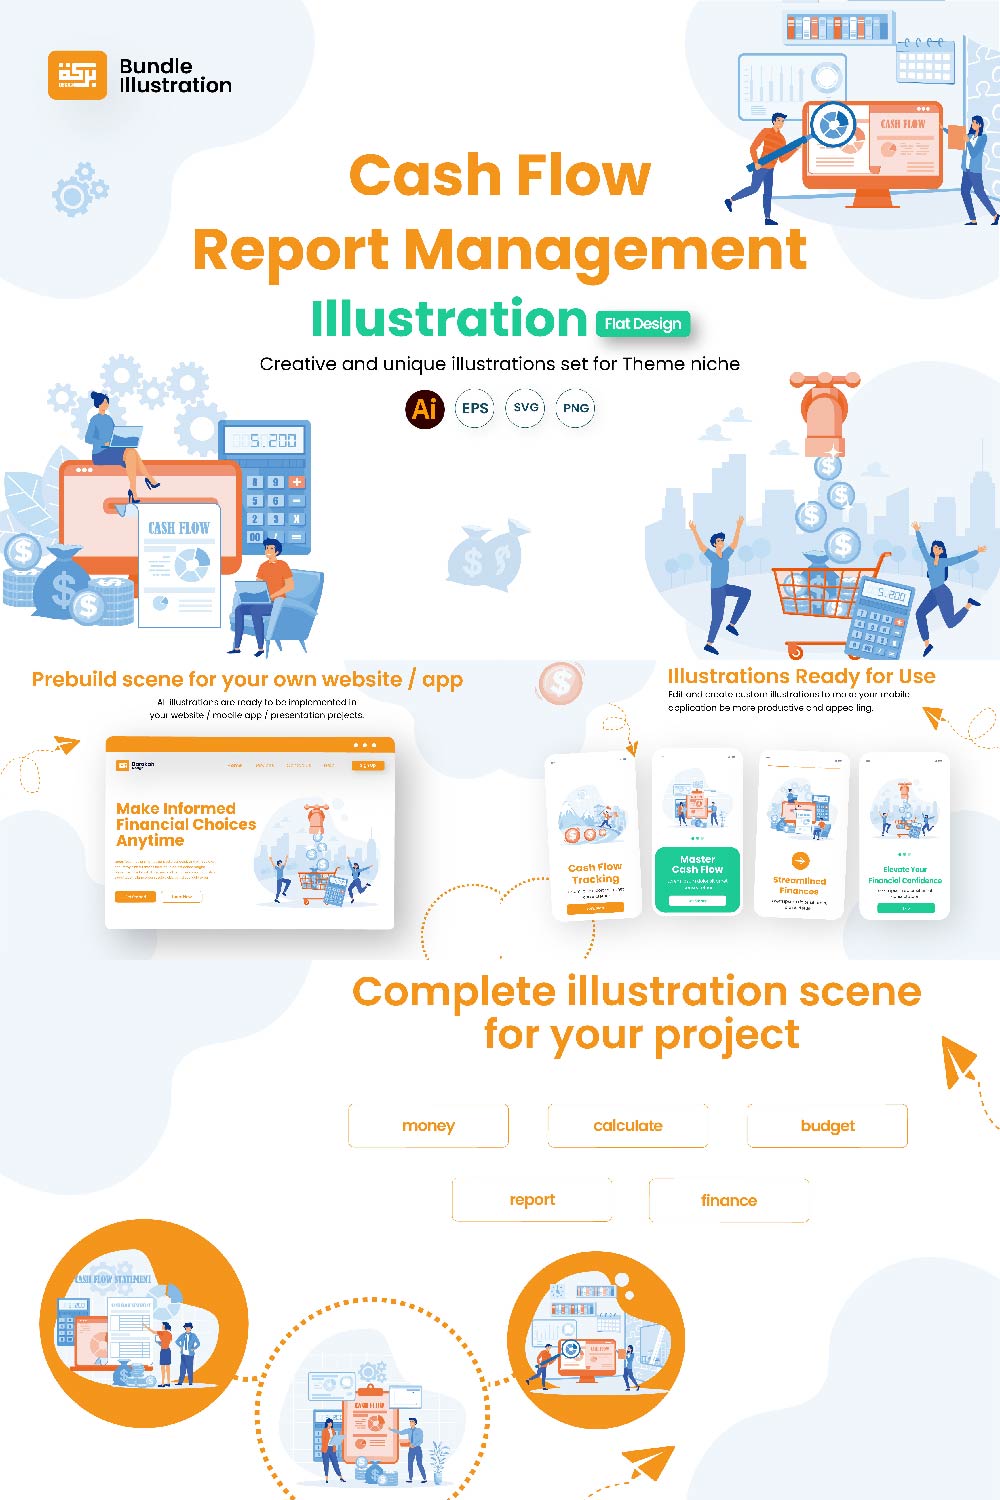 Cash Flow Report Management Illustration Design pinterest preview image.